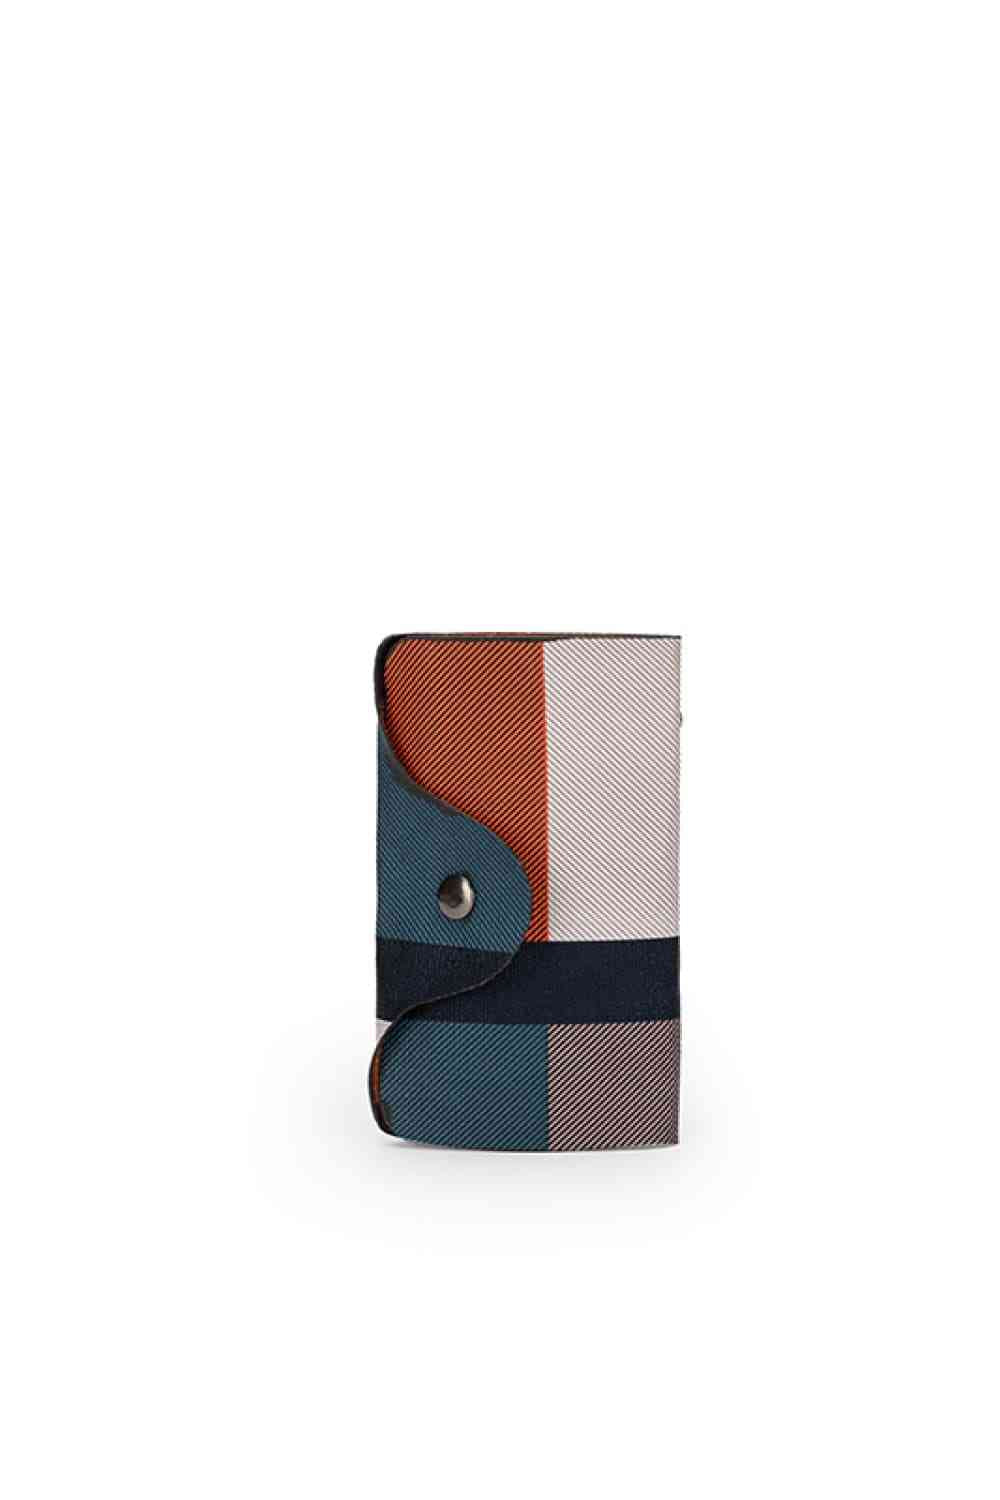 TEEK - 4-Piece Color Block Bag Set SET TEEK Trend   